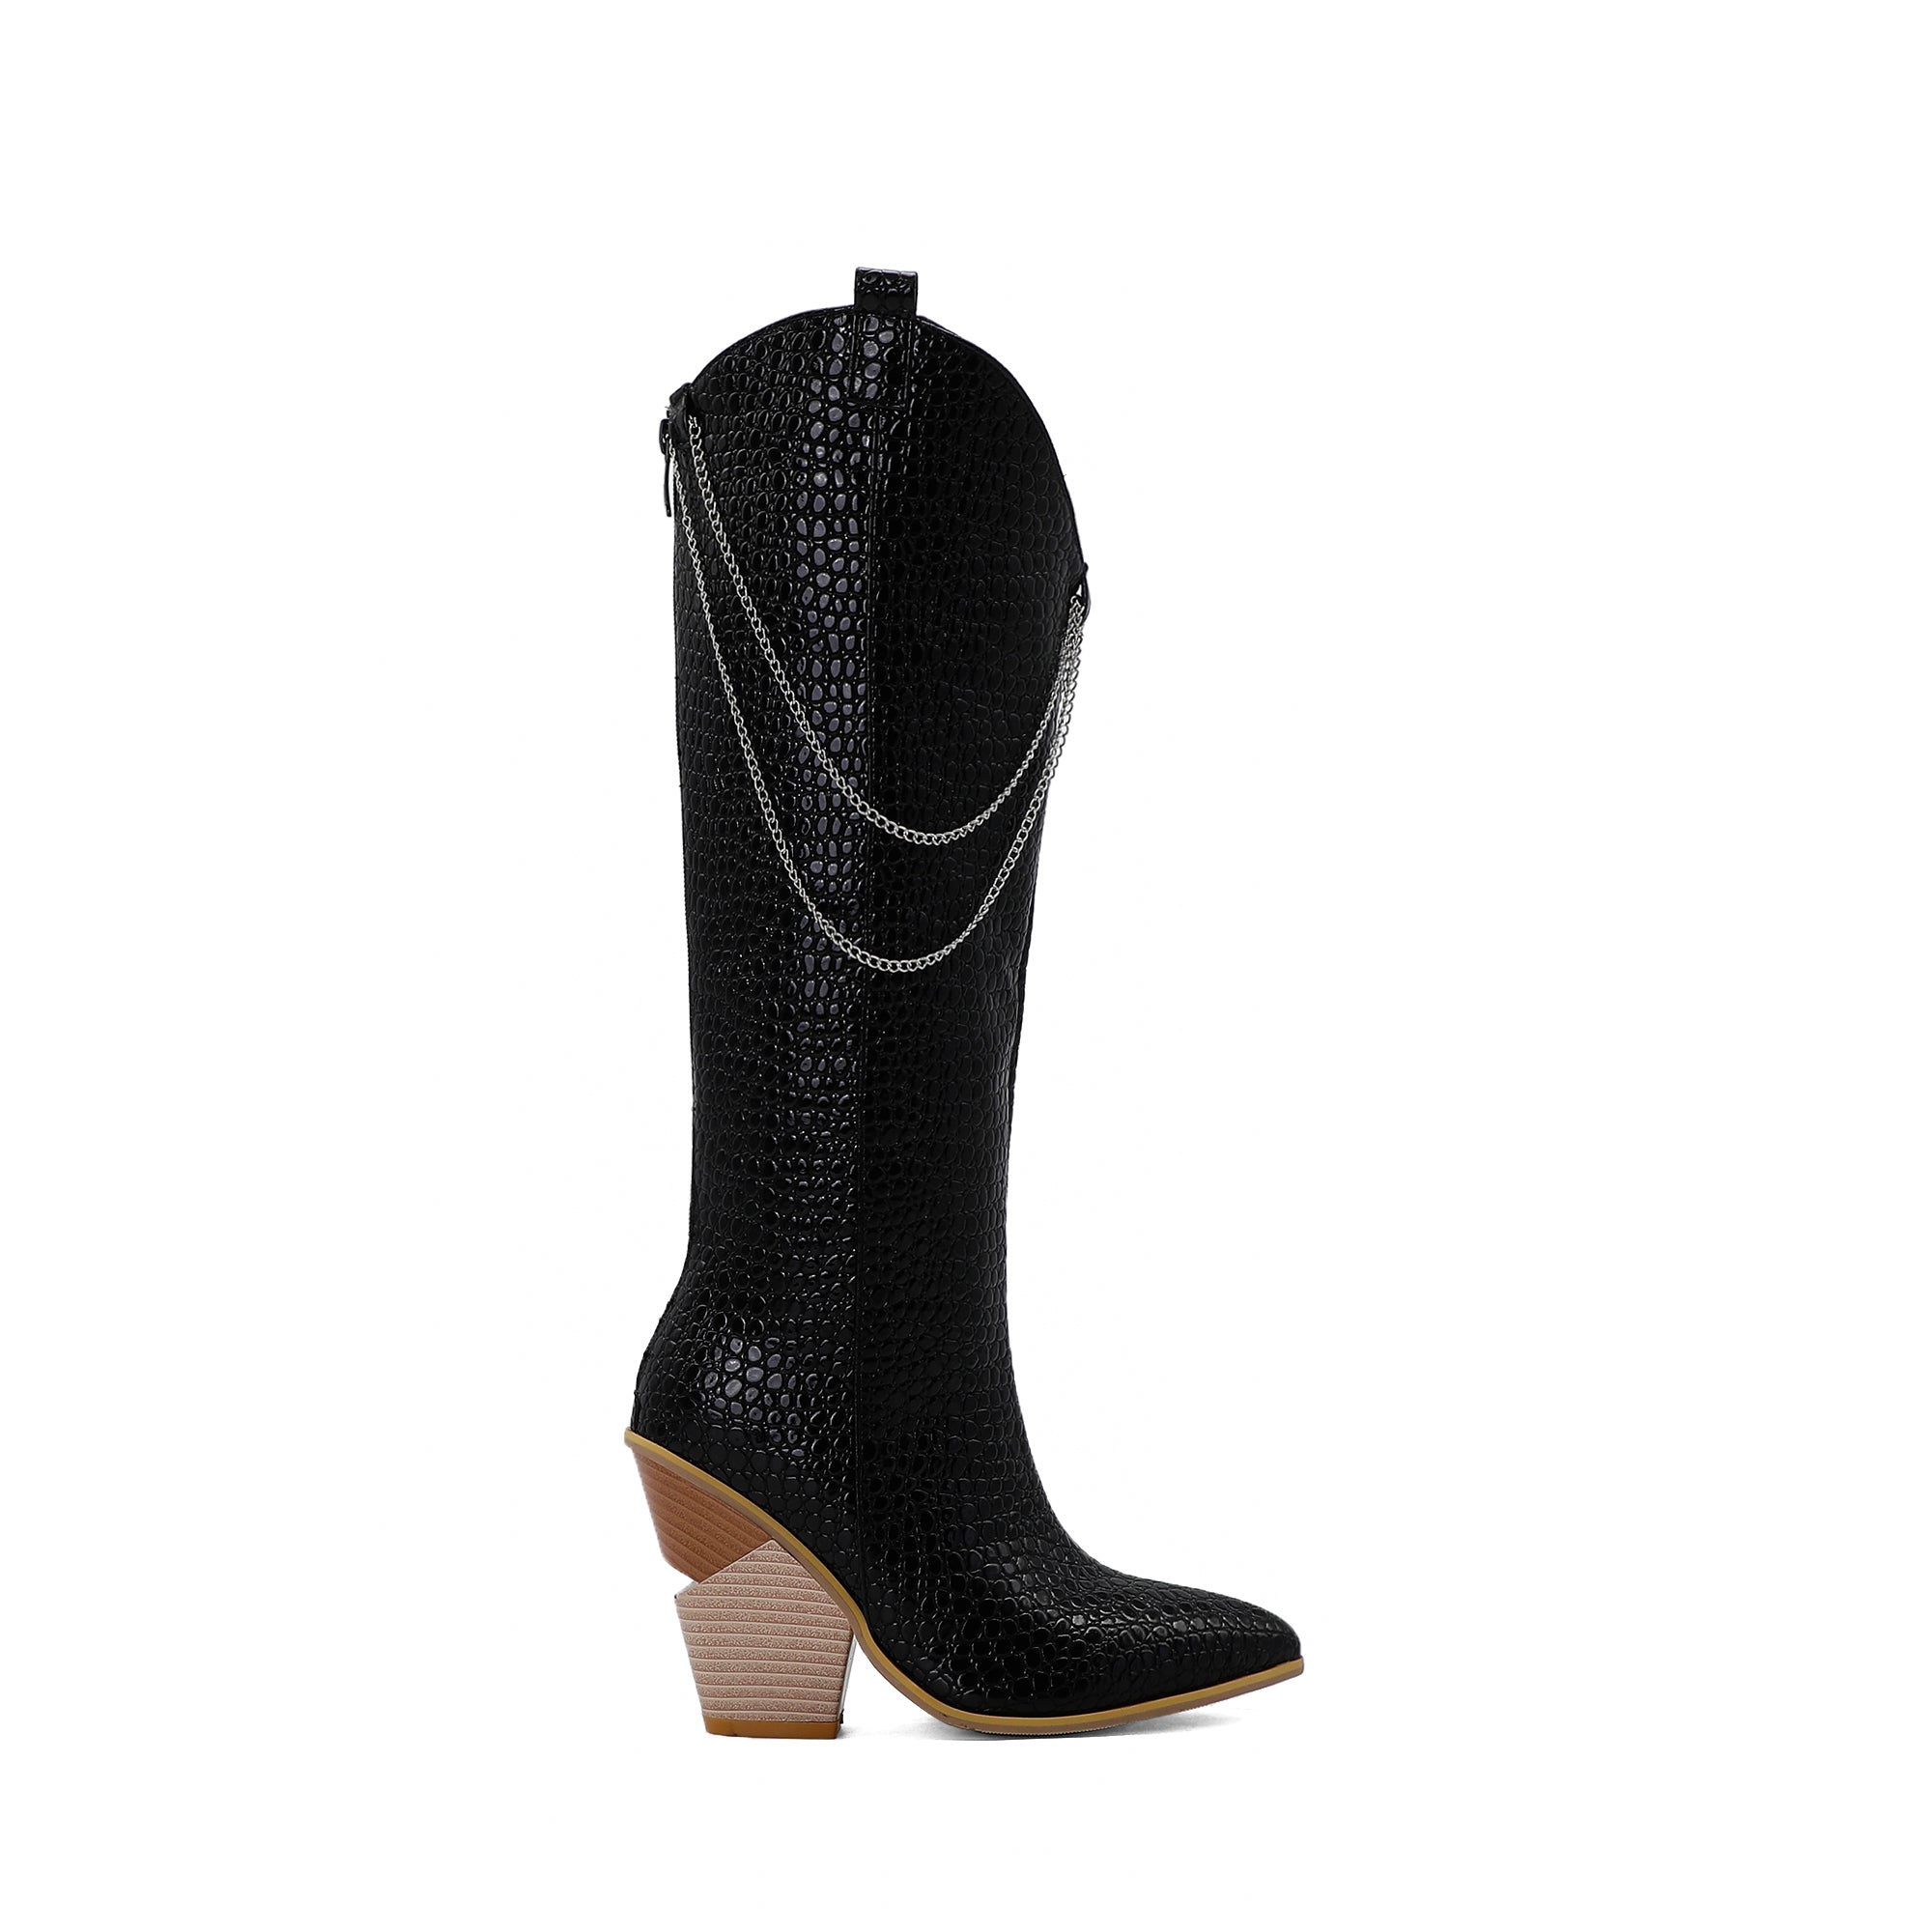 Bigsizeheels American western vintage boots - Black freeshipping - bigsizeheel®-size5-size15 -All Plus Sizes Available!